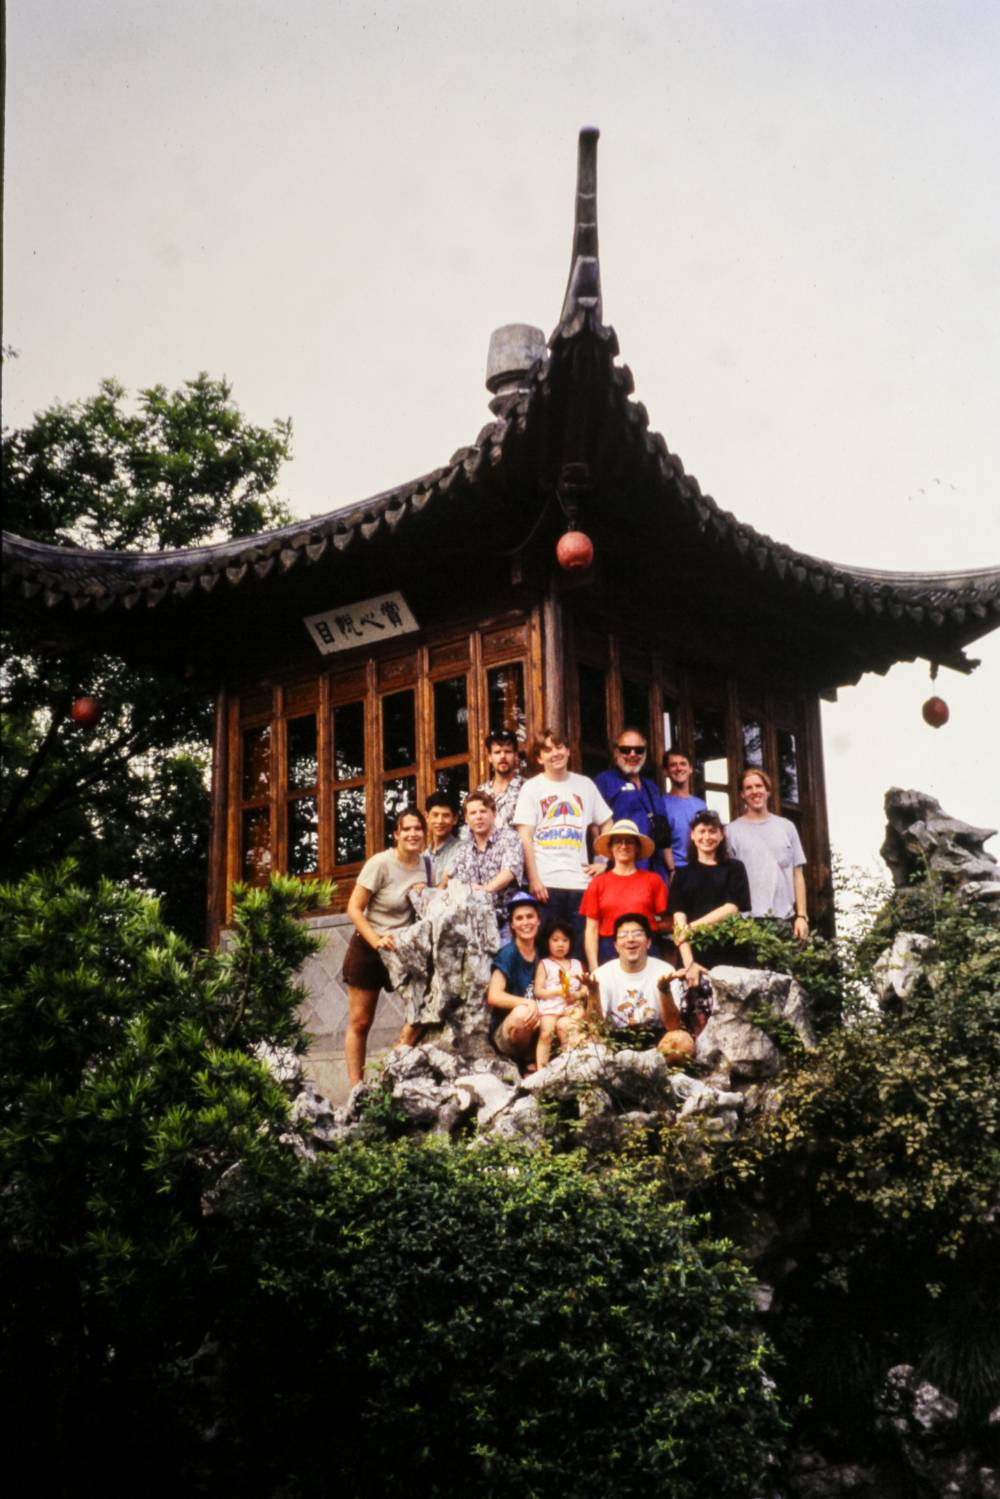 China Summer School at temple